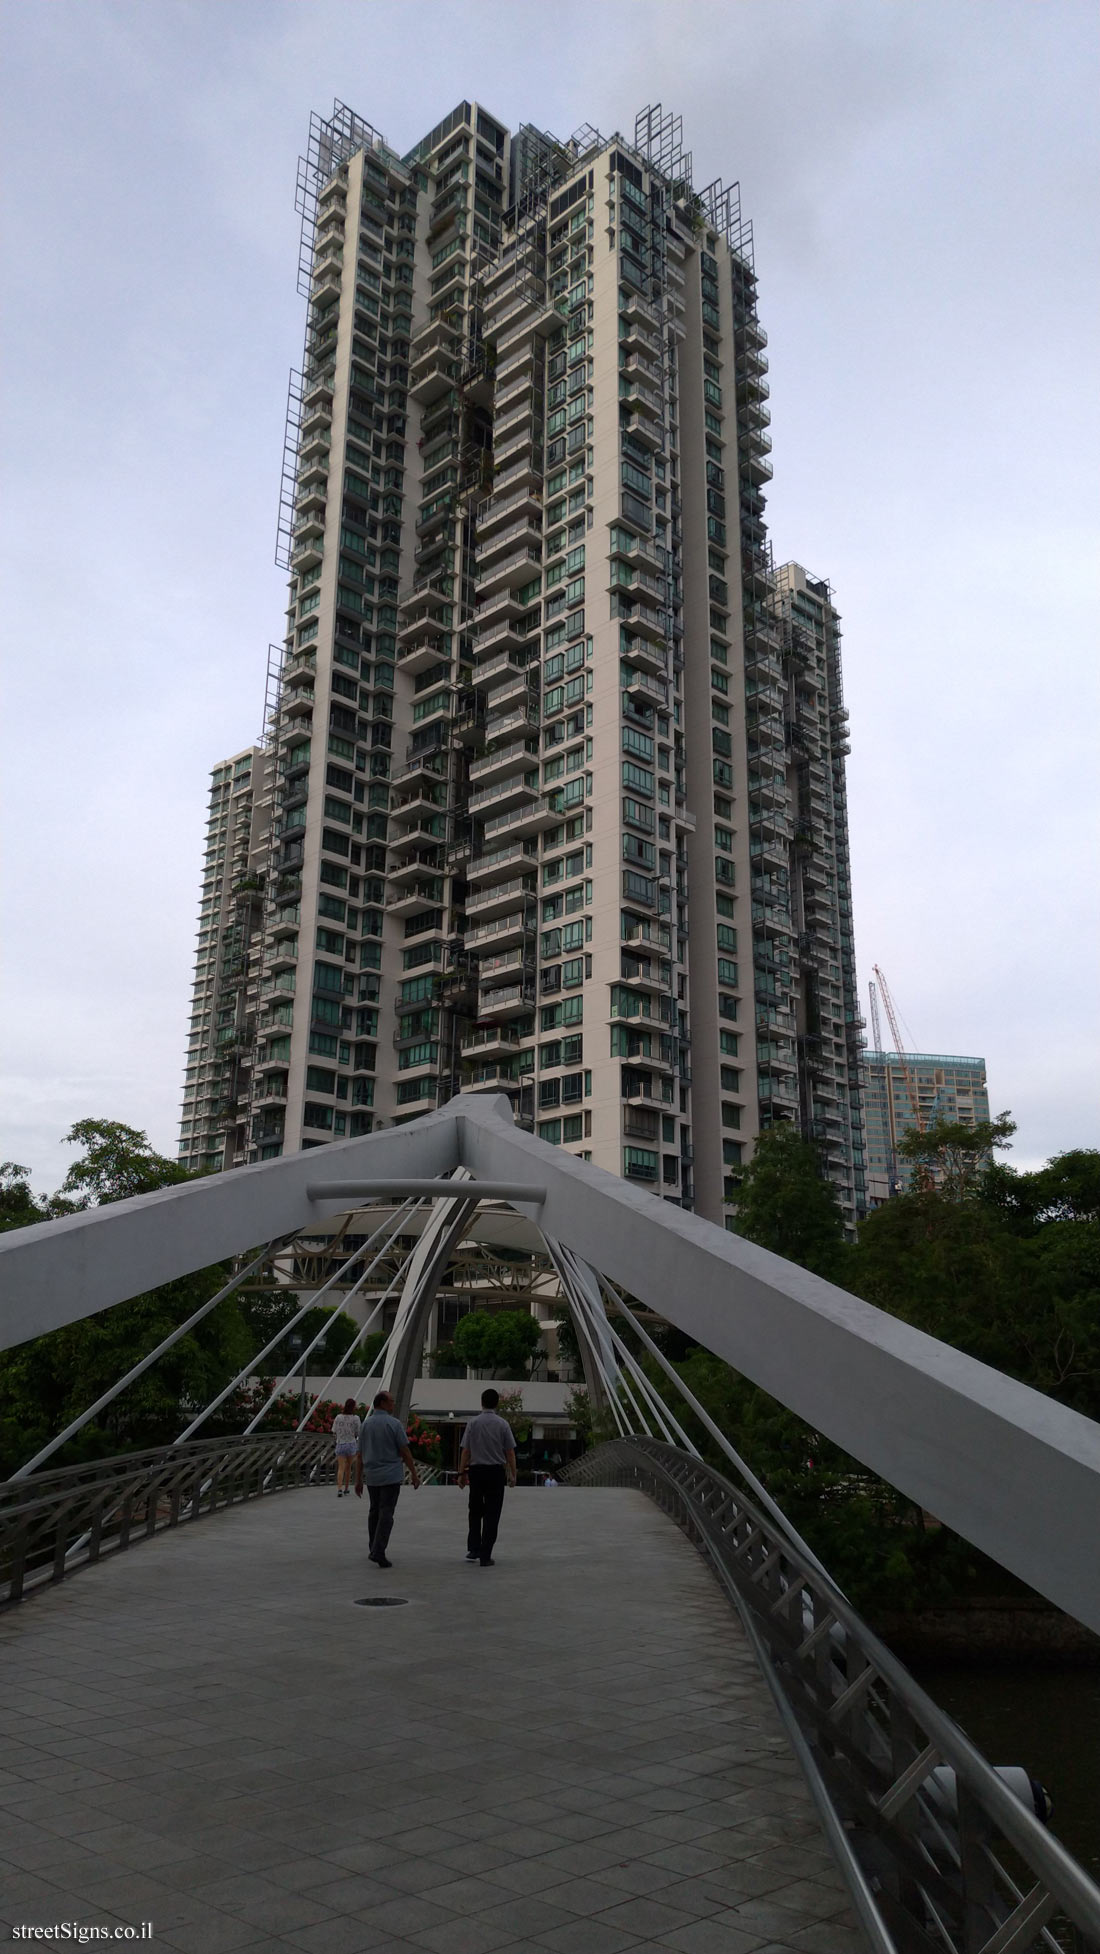 Singapore - Robertston Bridge